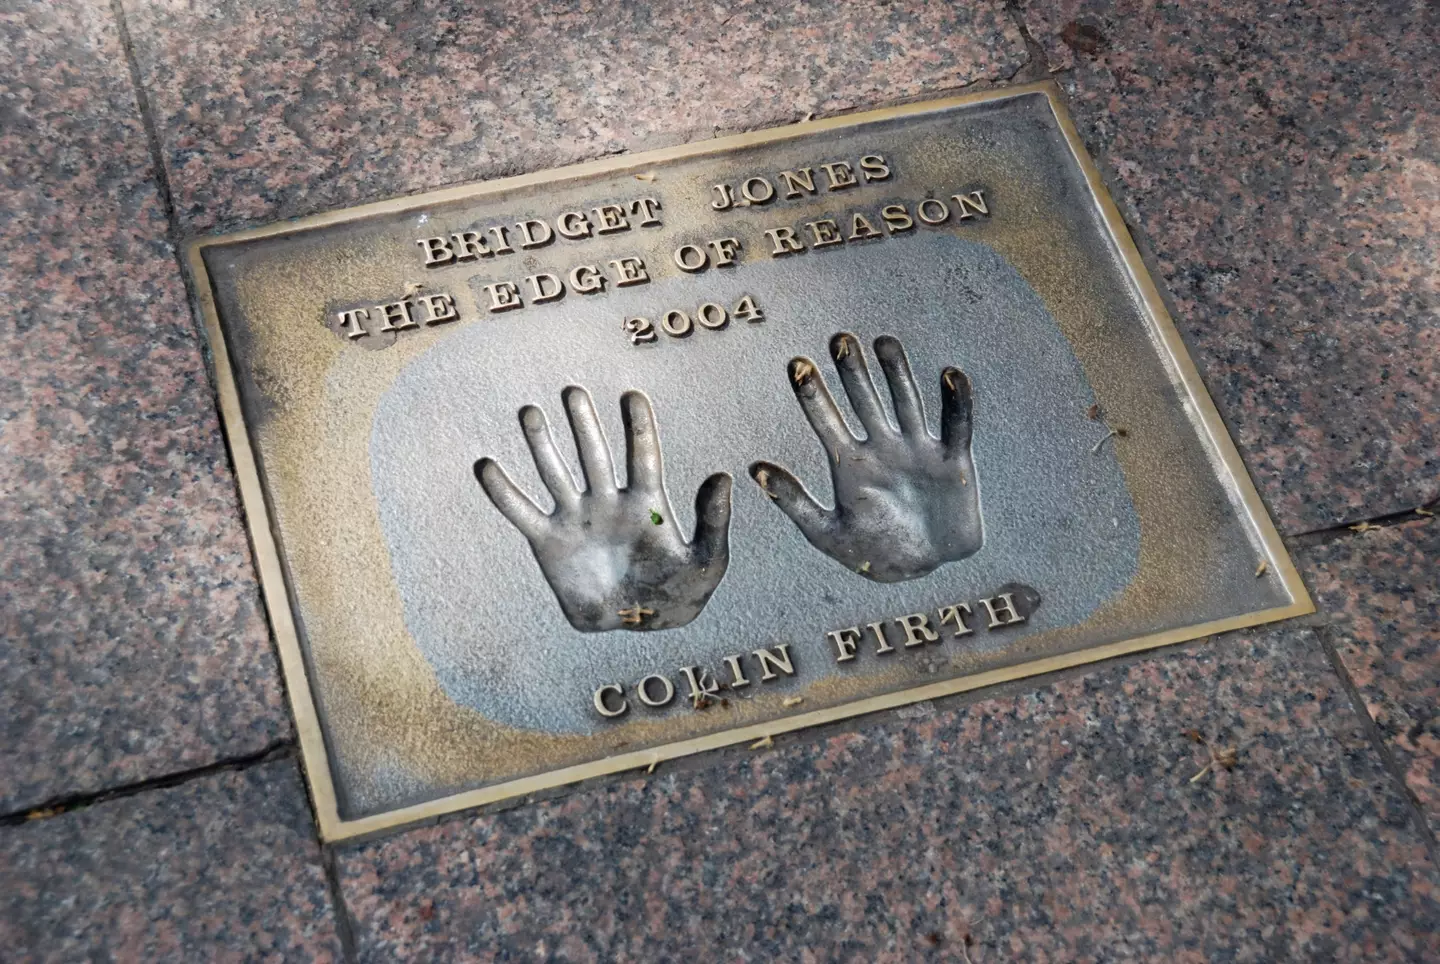 Colin Firth handprints in pavement commemorating the film Bridget Jones the Edge of Reason Leicester Square London.